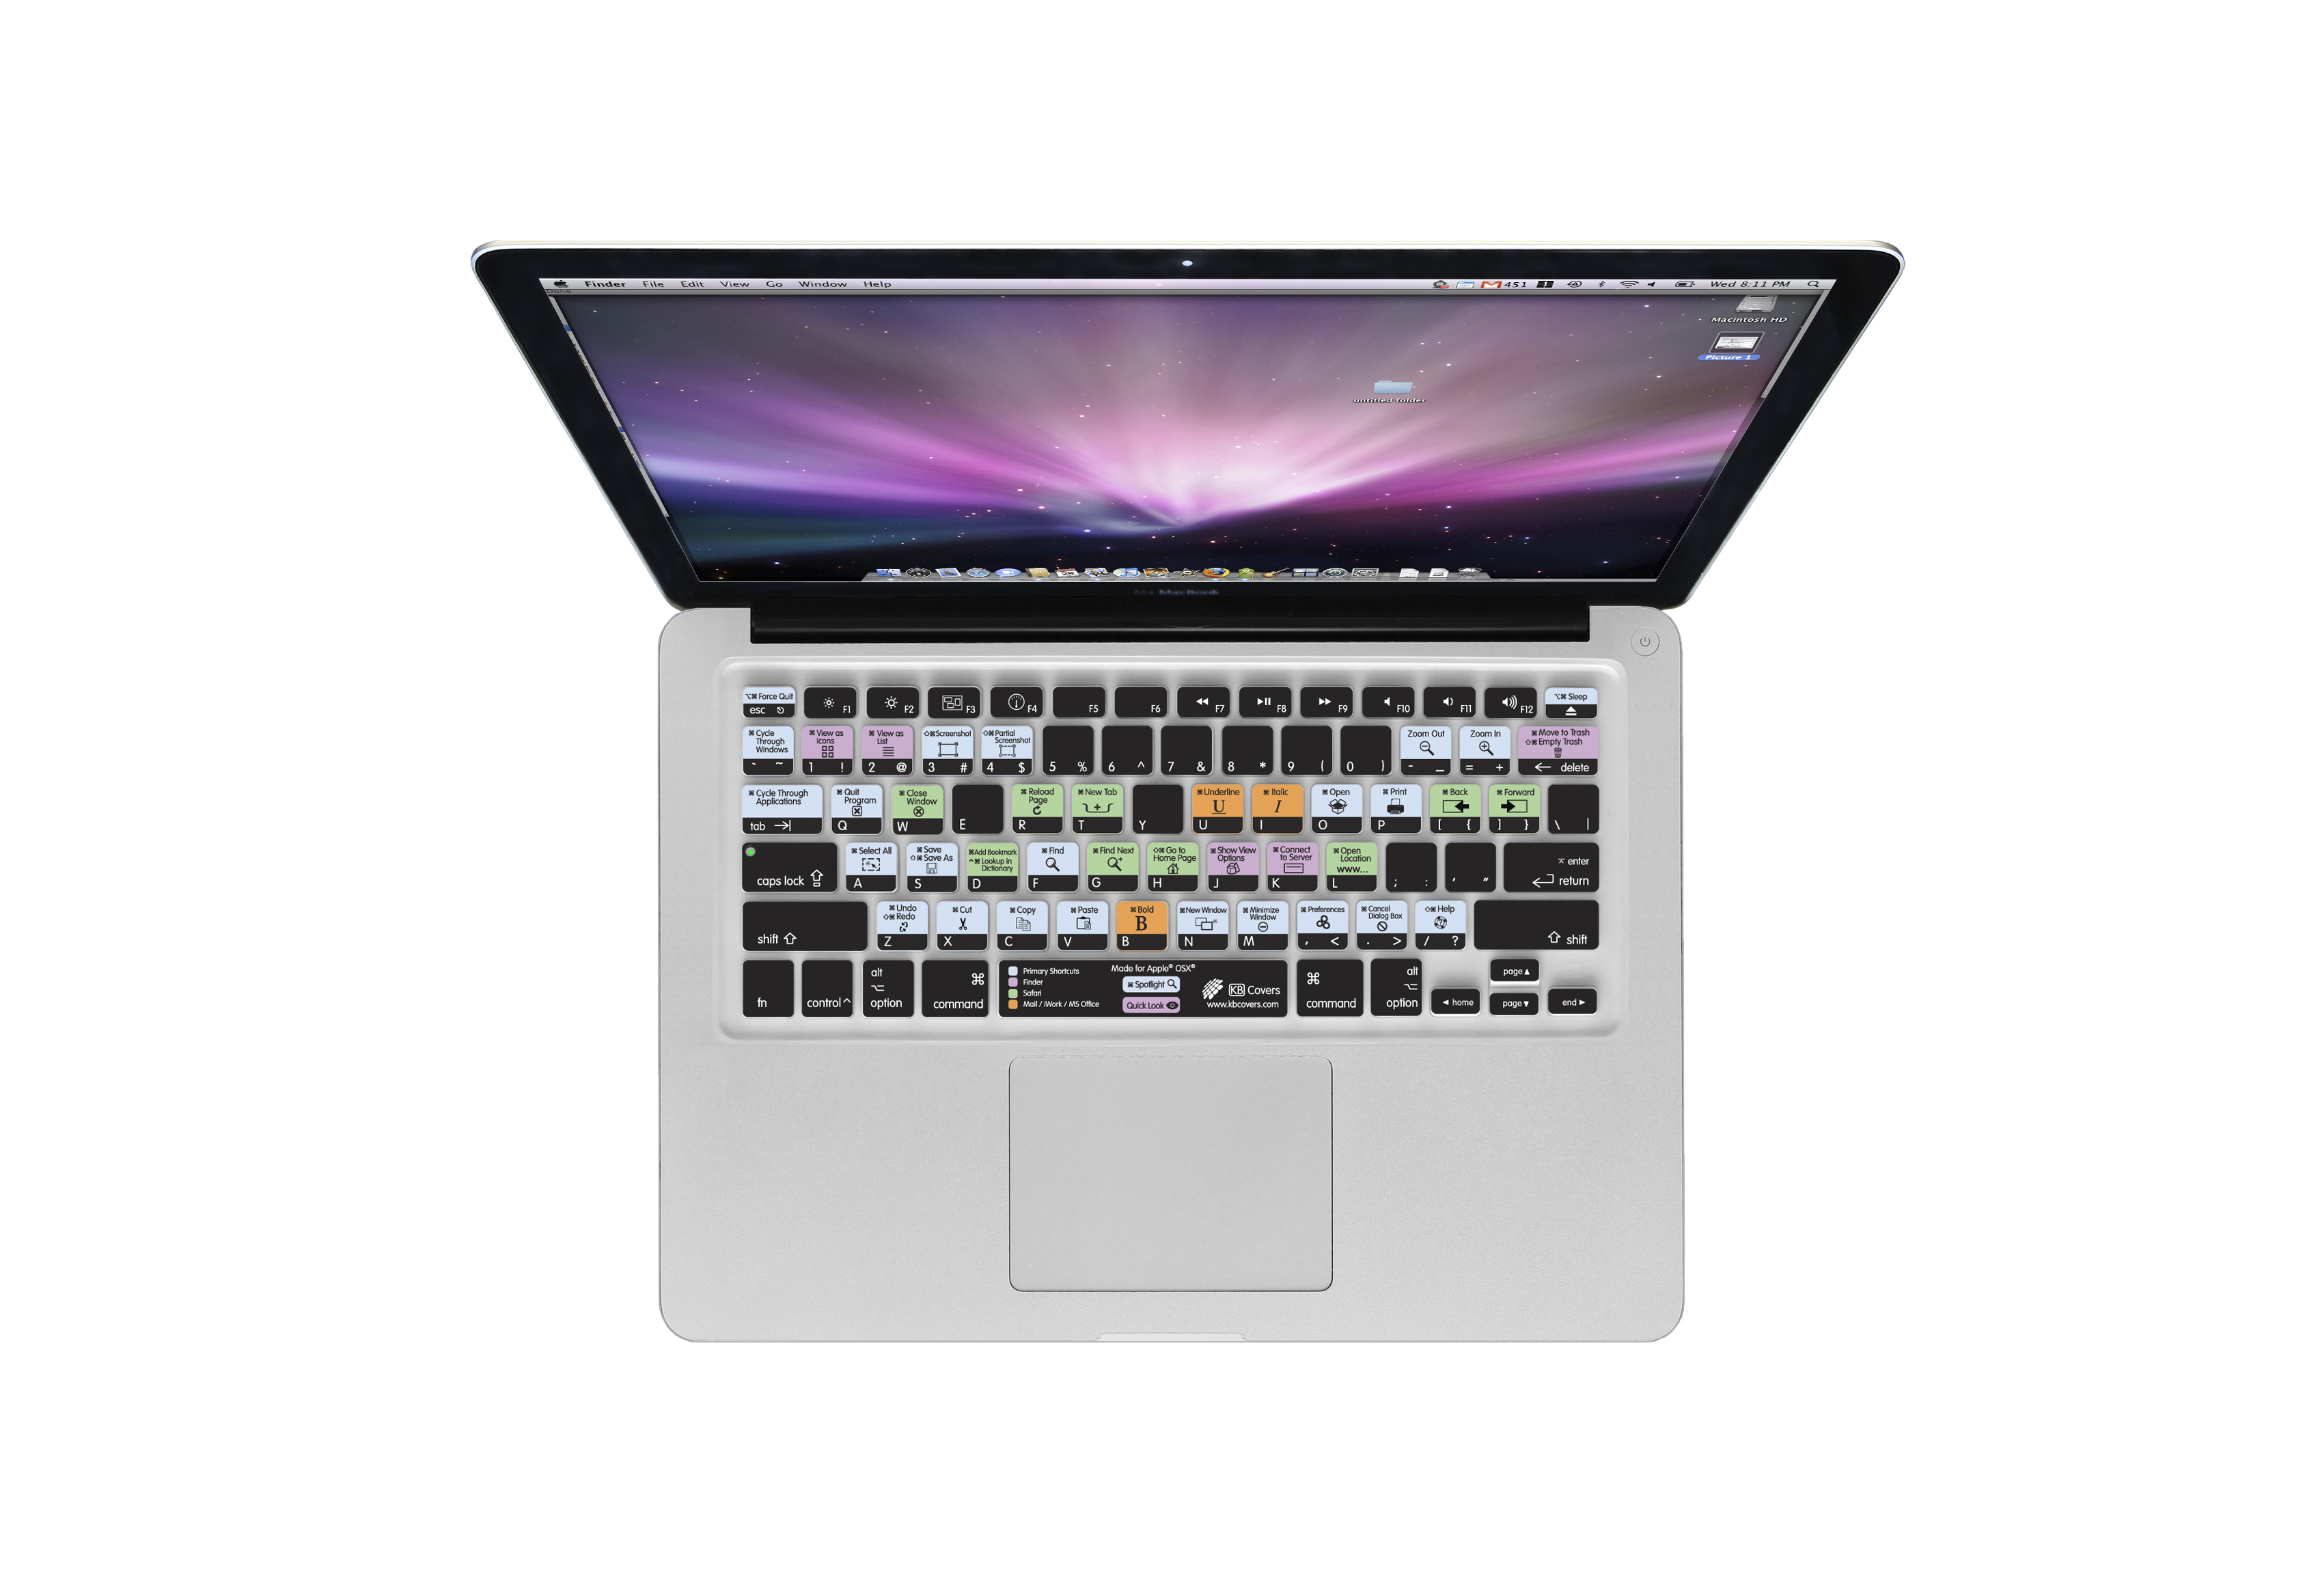 keyboard shortcuts on a mac